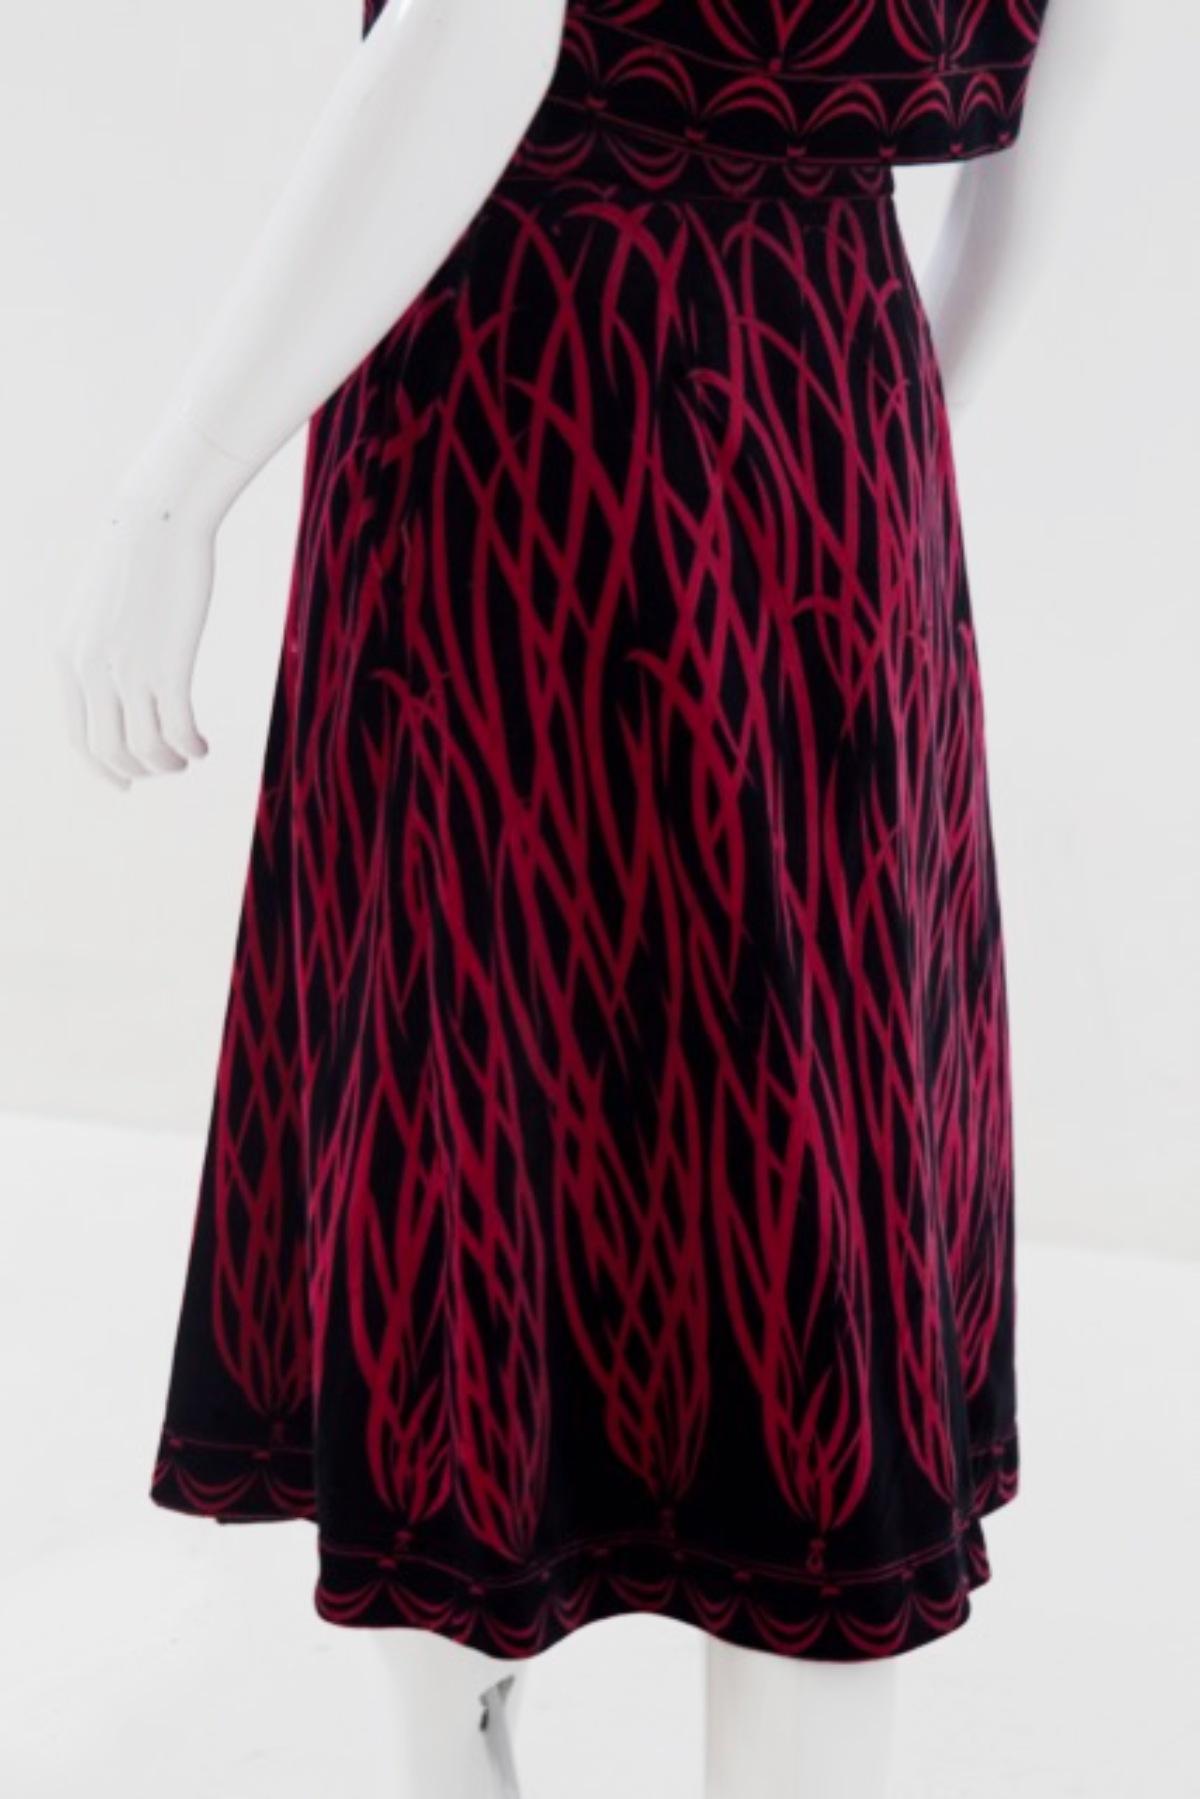 Emilio Pucci Psychedelic Velvet Two Pieces Suit For Sale 8